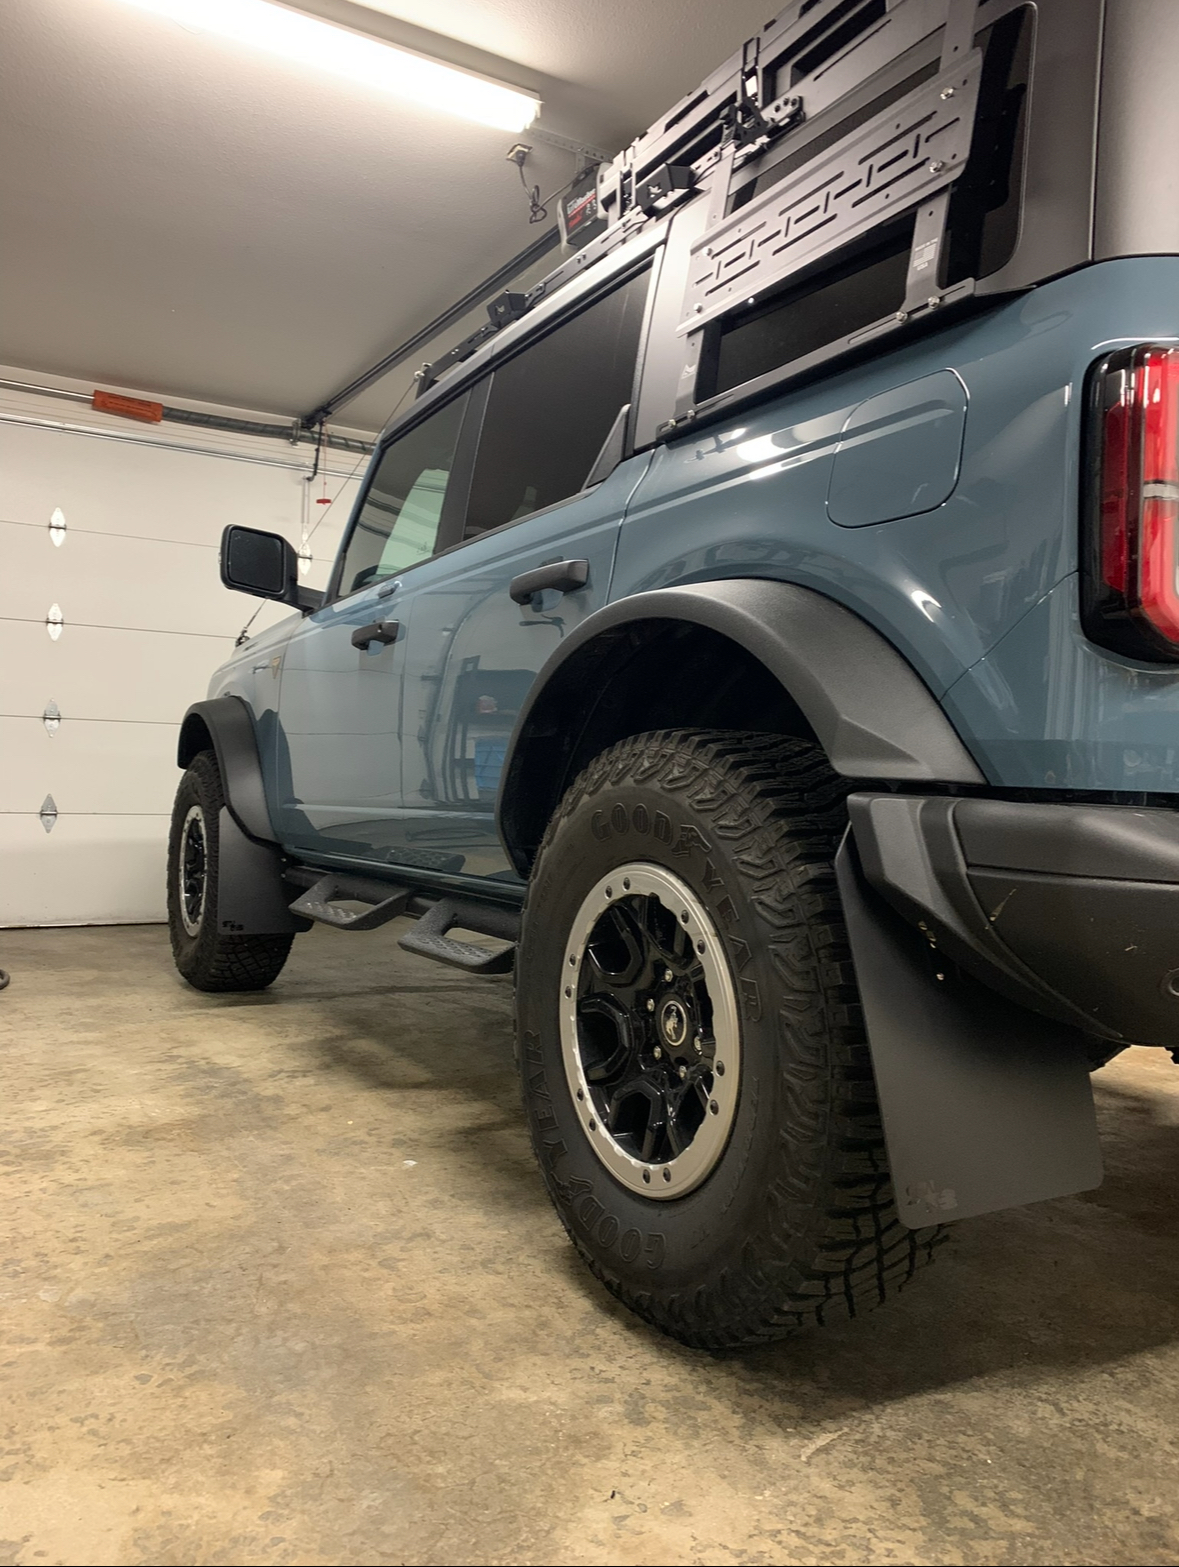 Ford Bronco Mudflaps RokBlokz XL pics request IMG_1125